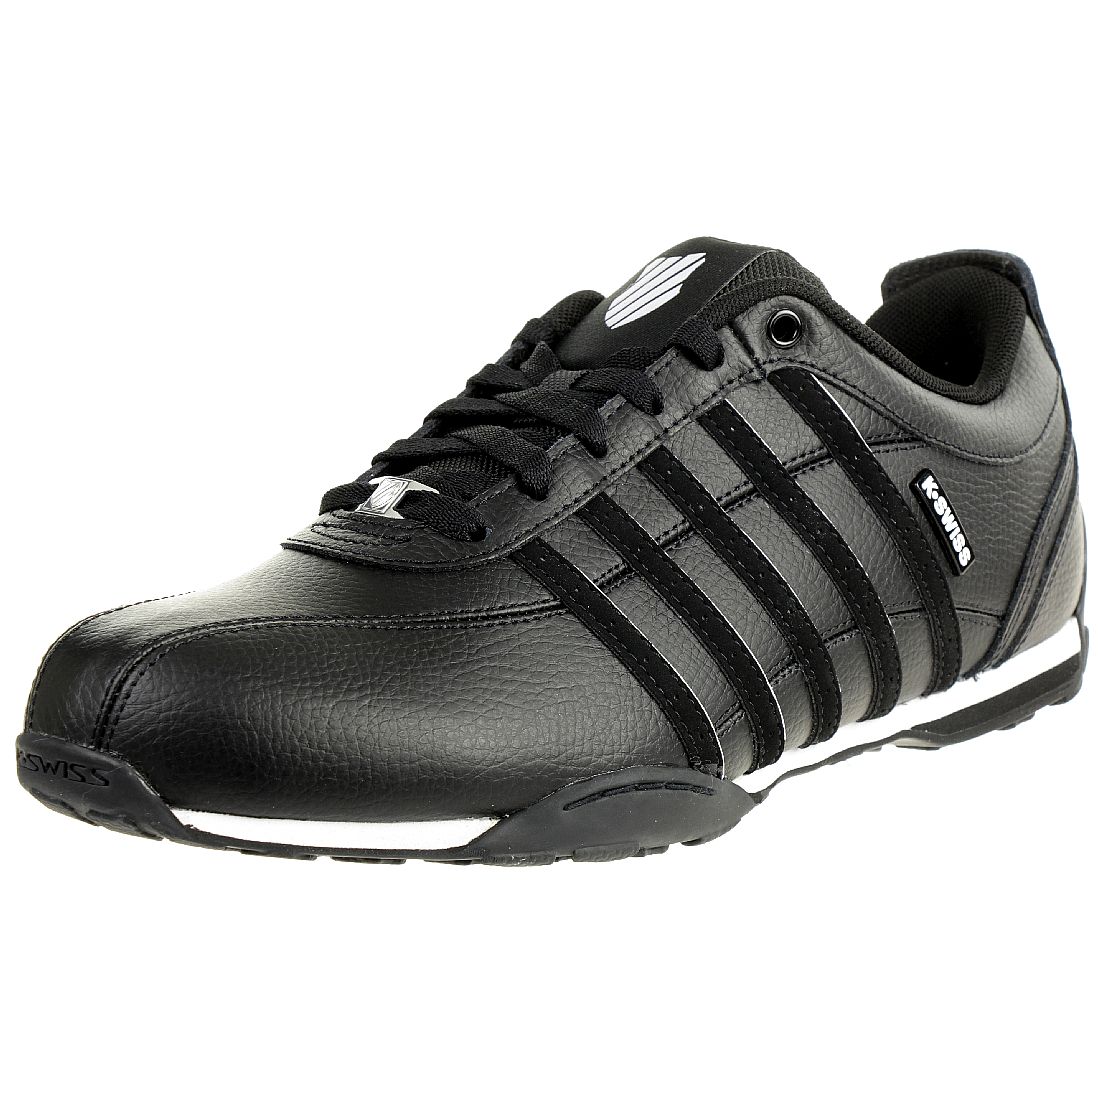 K-SWISS Arvee 1.5 Schuhe Sneaker schwarz Leder 02453-010-M